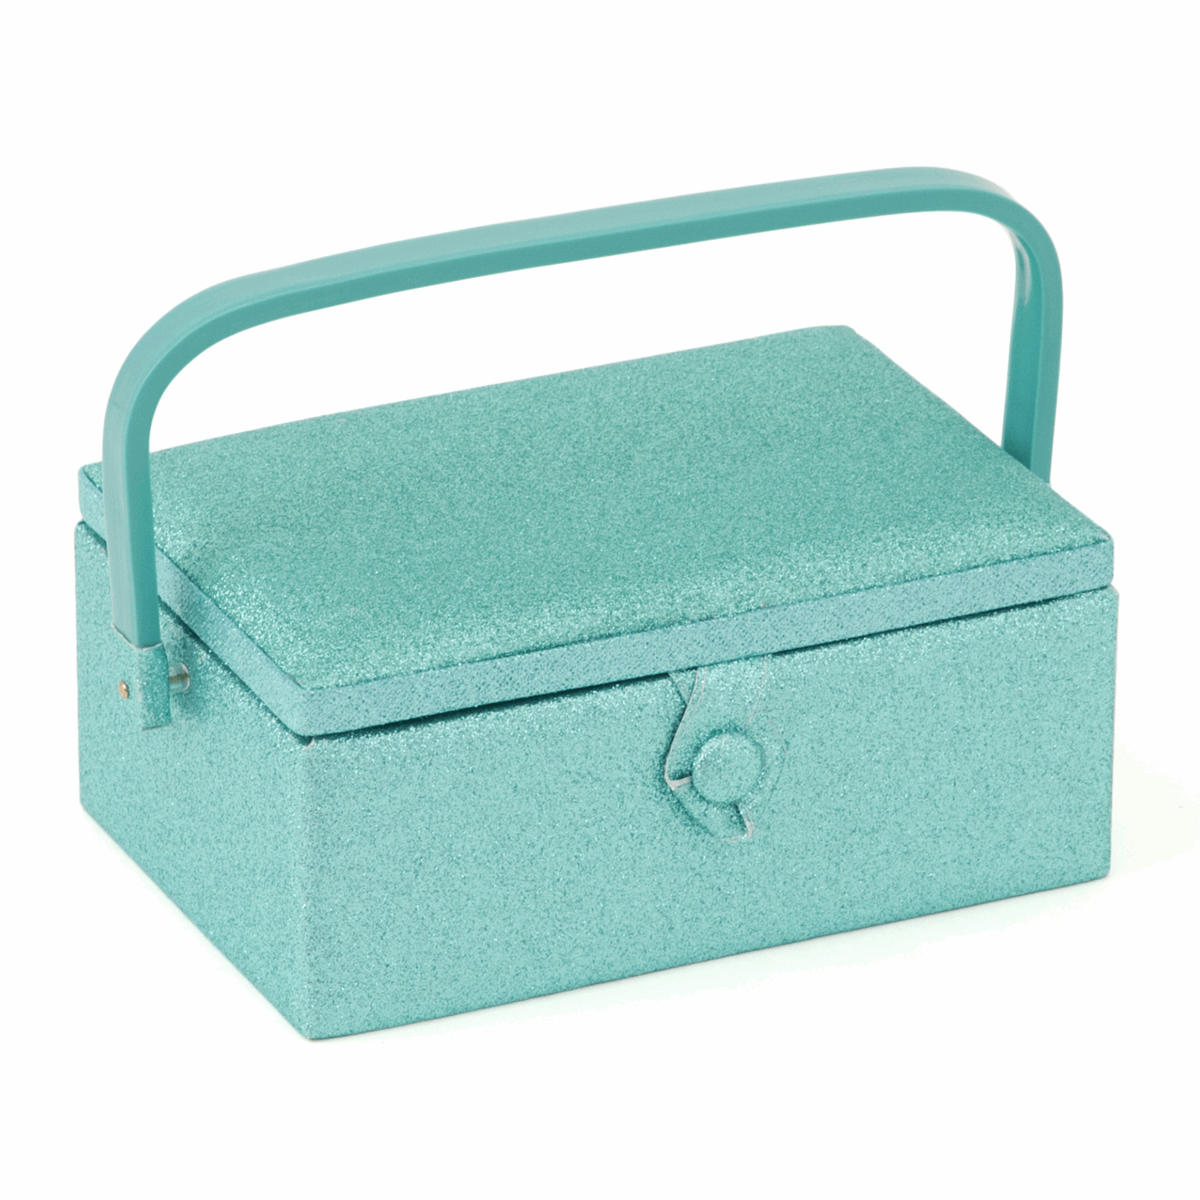 Aqua Glitter Sewing Box - Small